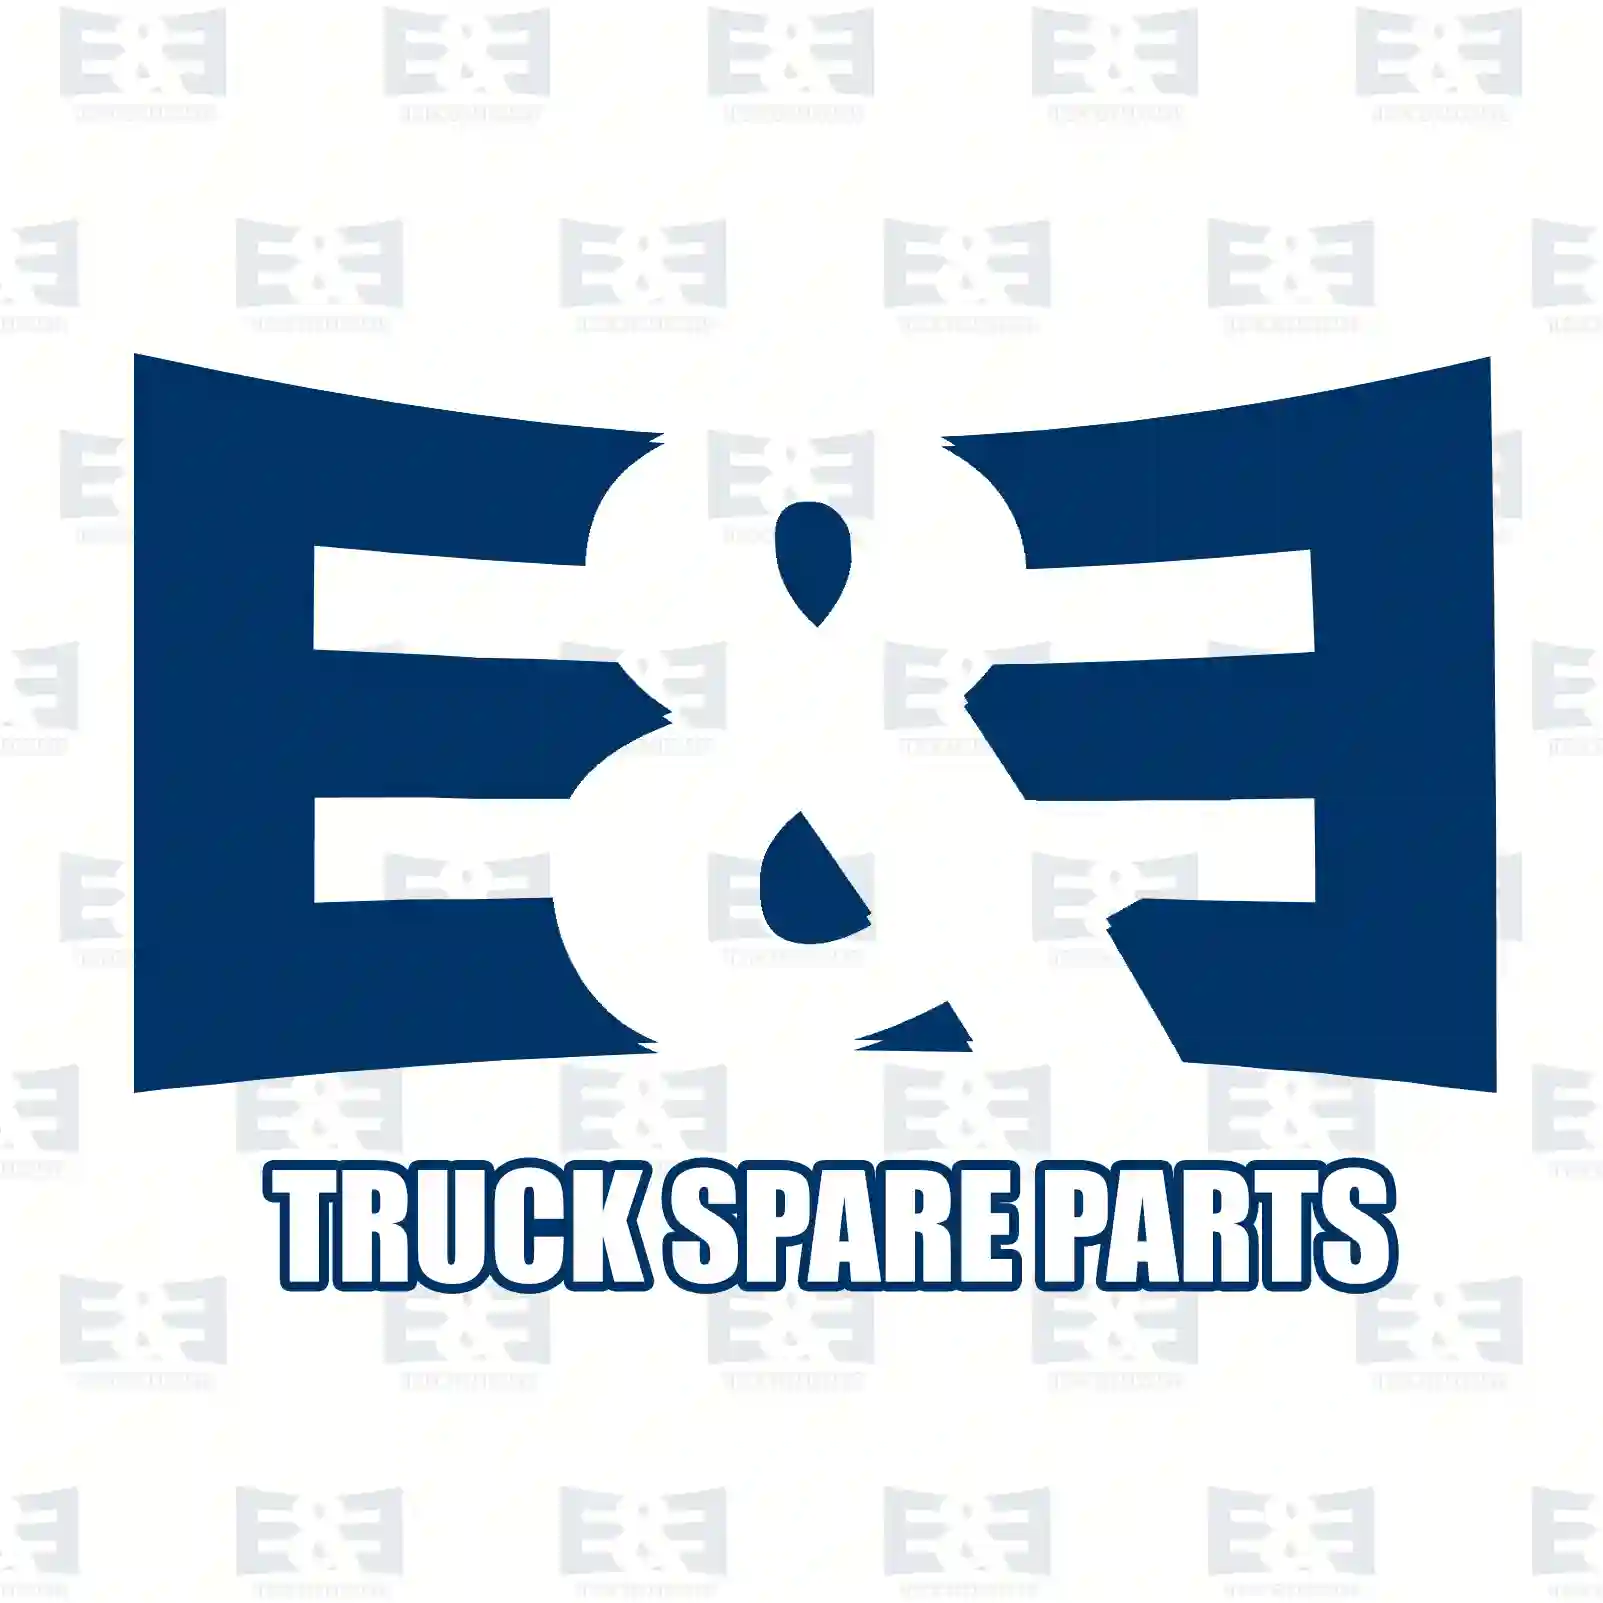 Cabin shock absorber, rear, 2E2276583, 81417226065, 8141 ||  2E2276583 E&E Truck Spare Parts | Truck Spare Parts, Auotomotive Spare Parts Cabin shock absorber, rear, 2E2276583, 81417226065, 8141 ||  2E2276583 E&E Truck Spare Parts | Truck Spare Parts, Auotomotive Spare Parts